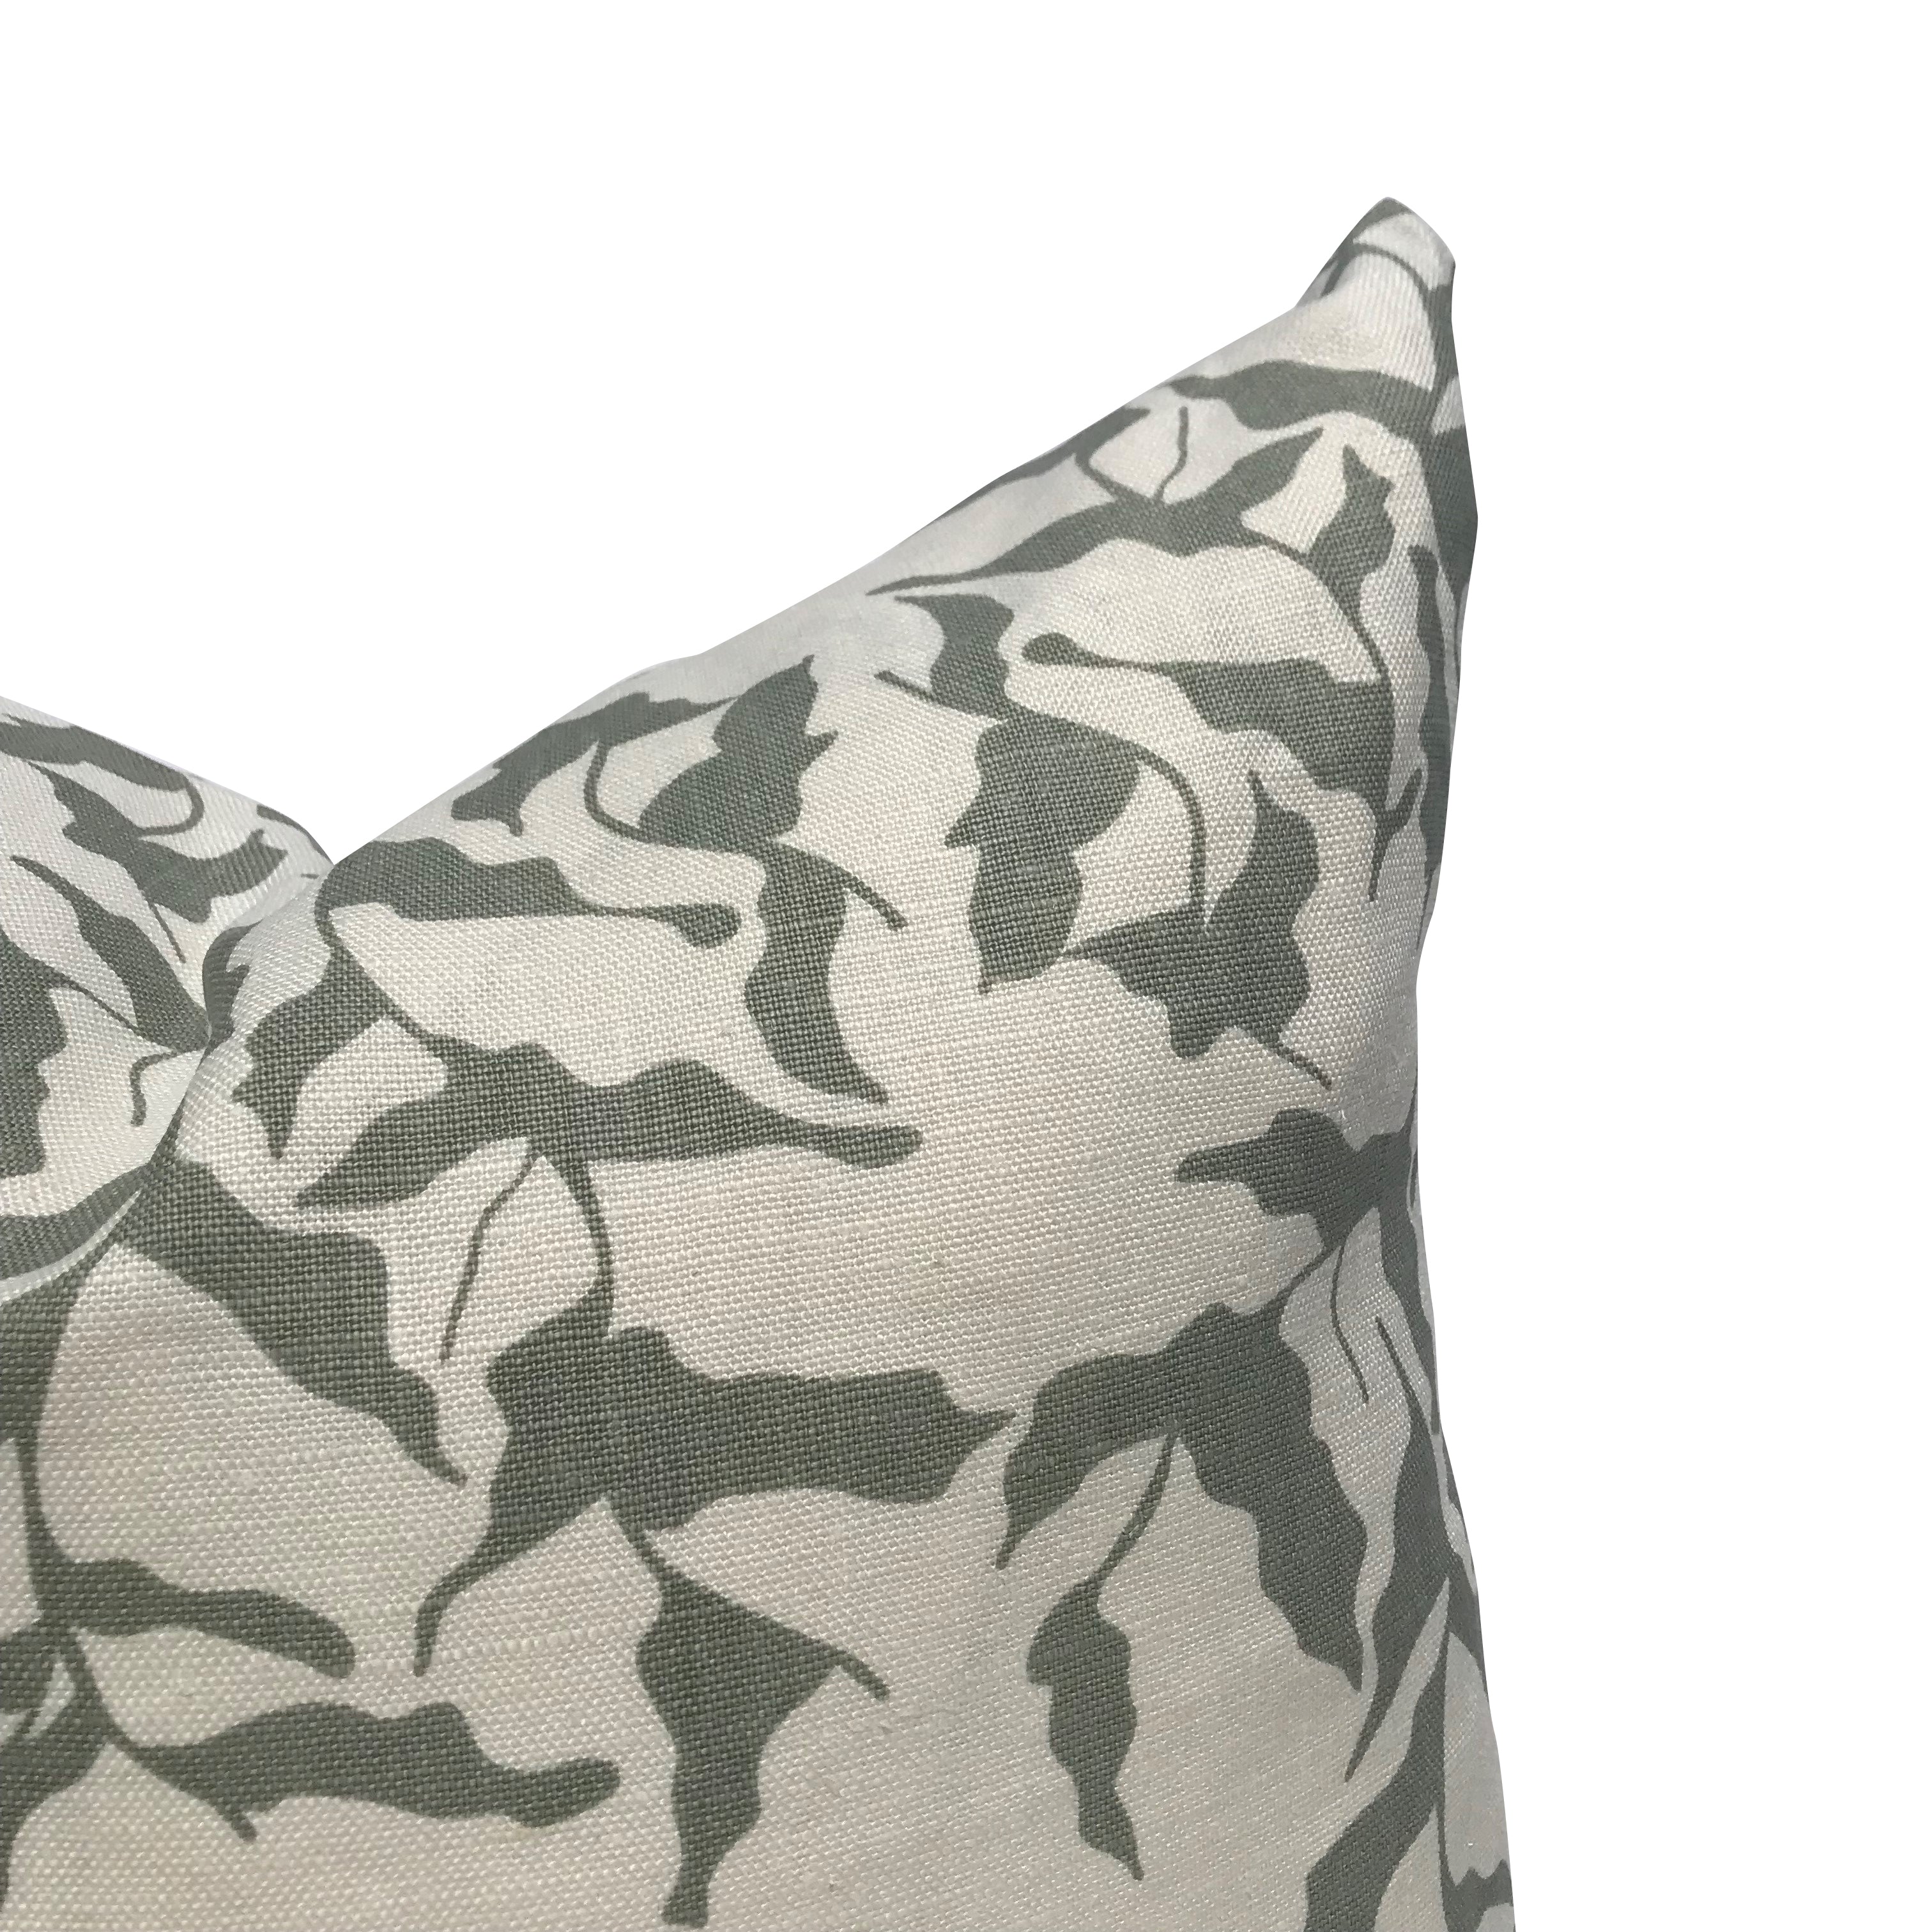 Mer pillow Moss on Oyster - greige design